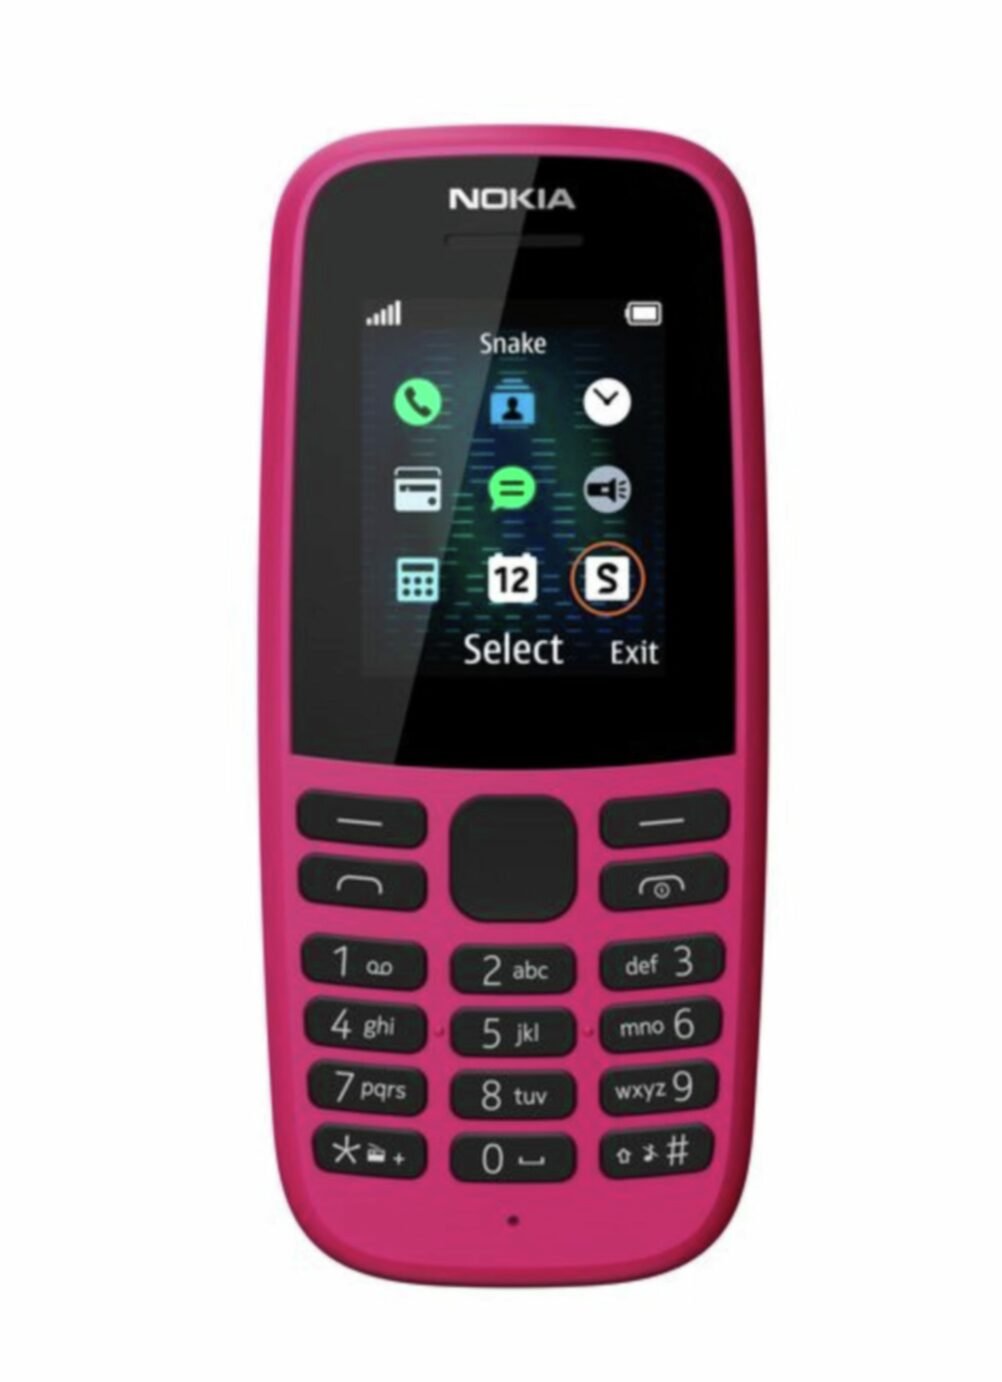 SIM Free Nokia 105 Mobile Phone - Pink